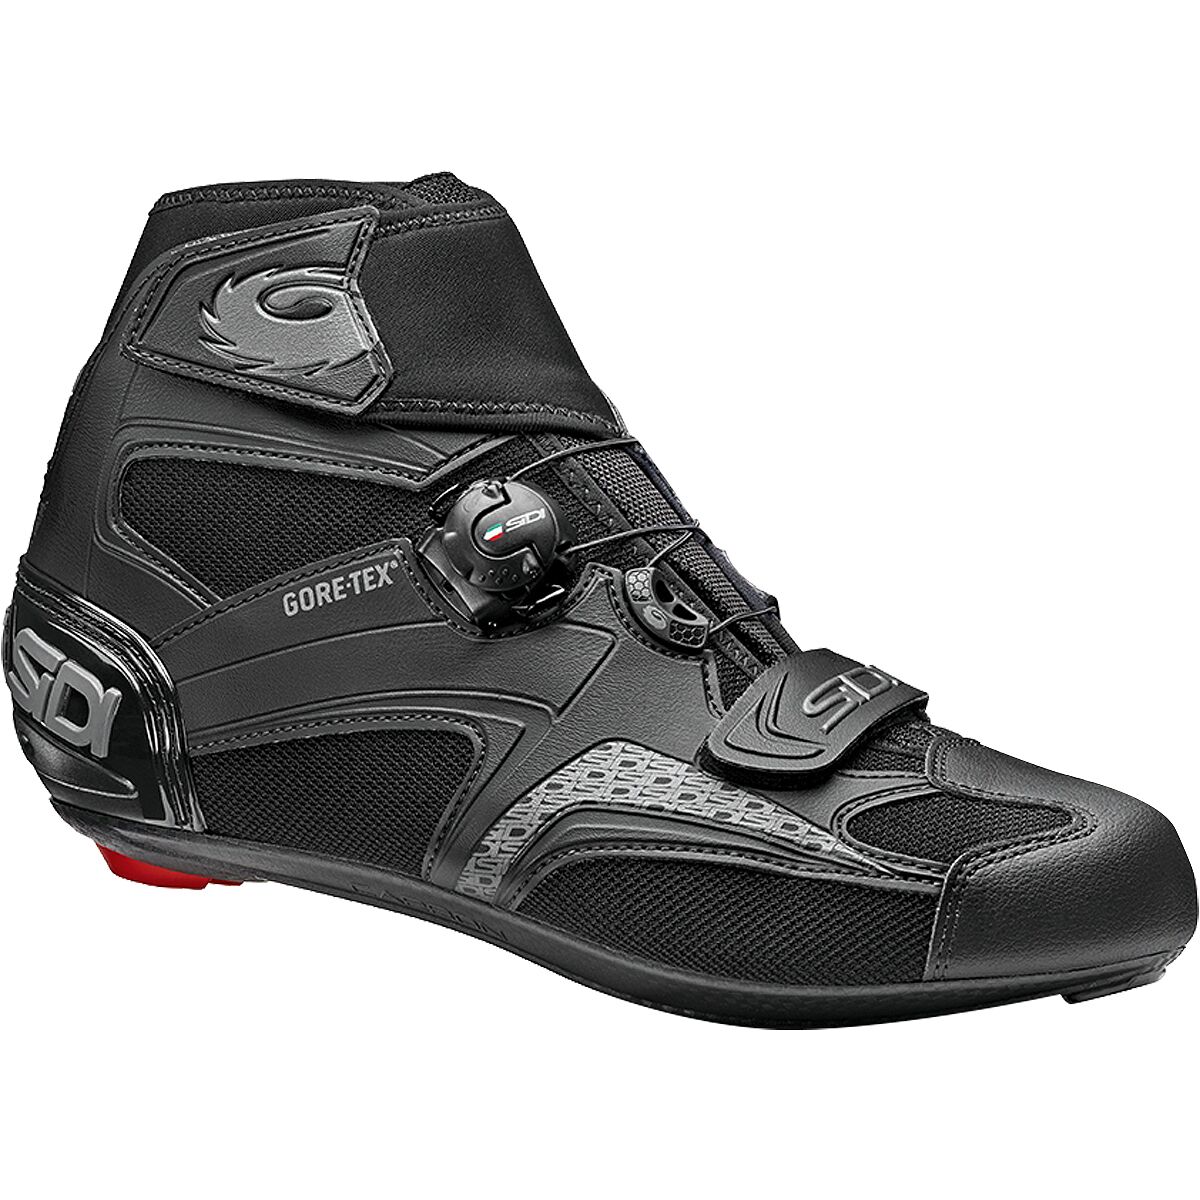 Sidi Zero GORE-TEX 2 Cycling Shoe - Men's Black/Black, 43.0 -  SRS-ZG2-BKBK-430